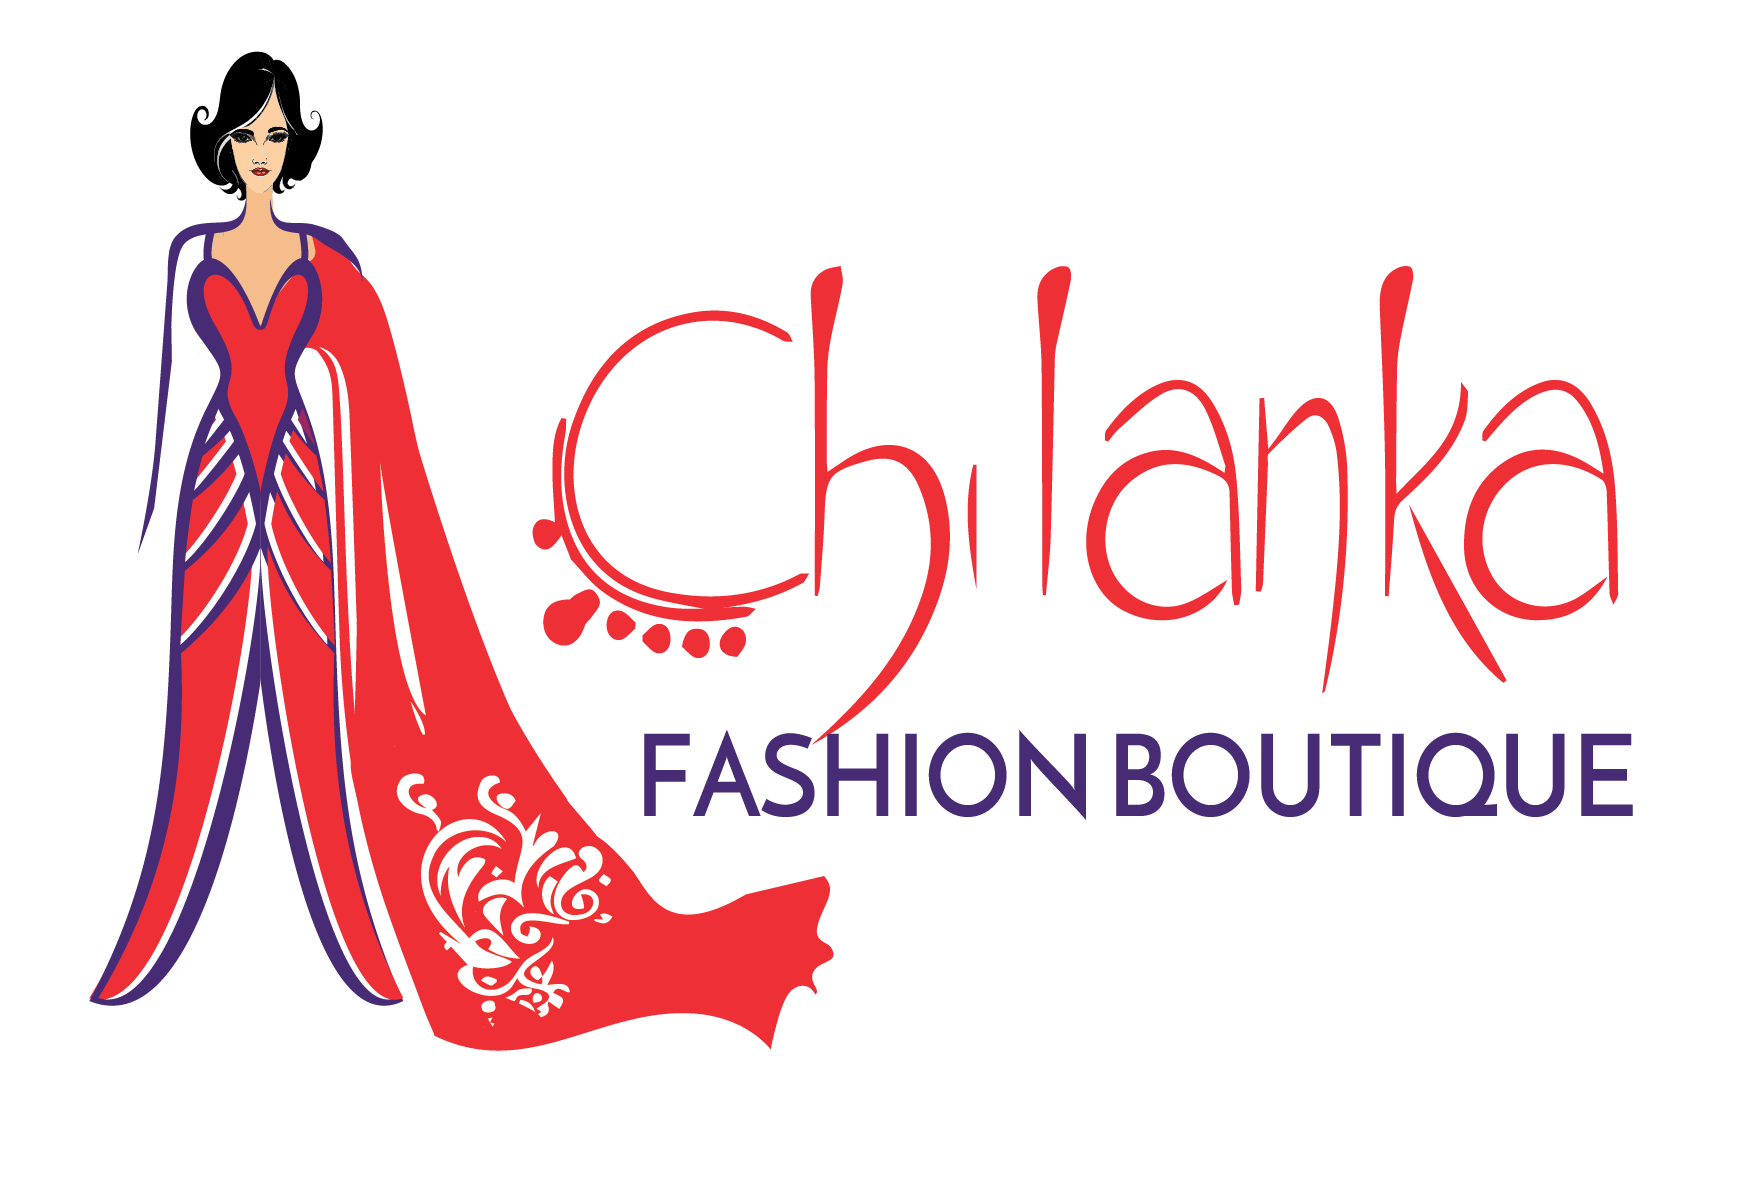 Chilanka Fashions